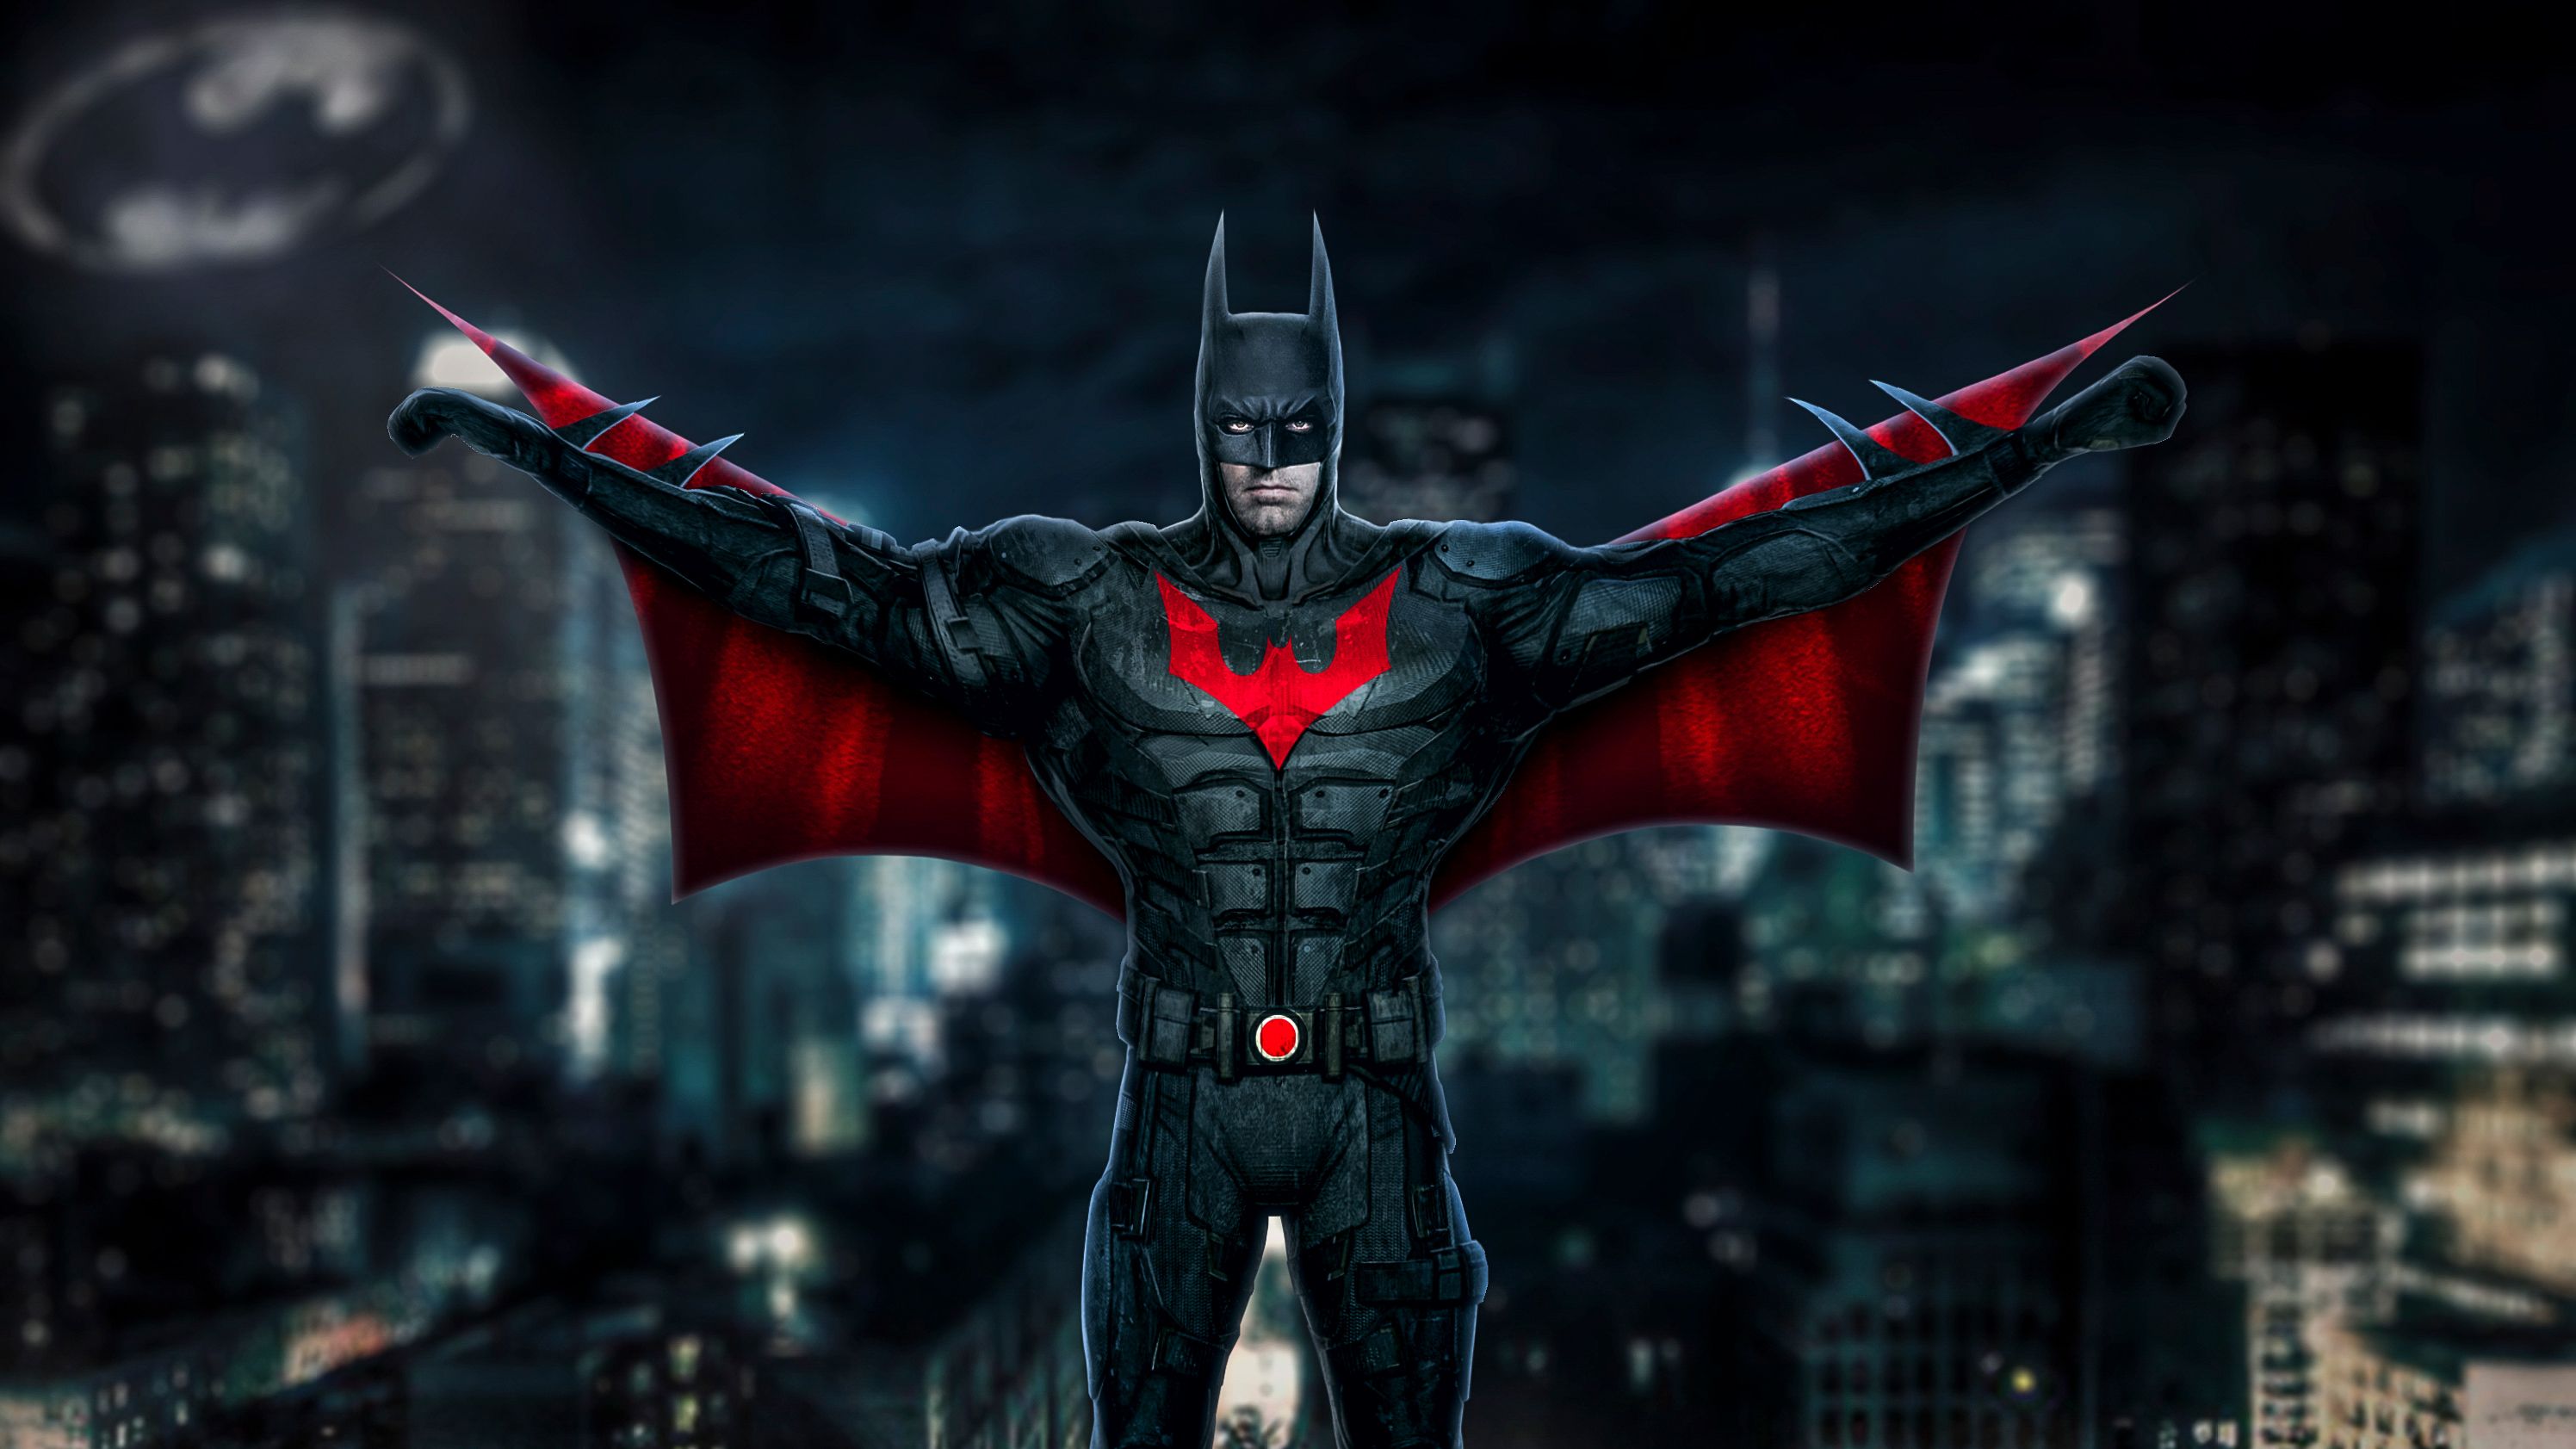 Batman Beyond Fanart Laptop Full HD 1080P HD 4k Wallpaper, Image, Background, Photo and Picture